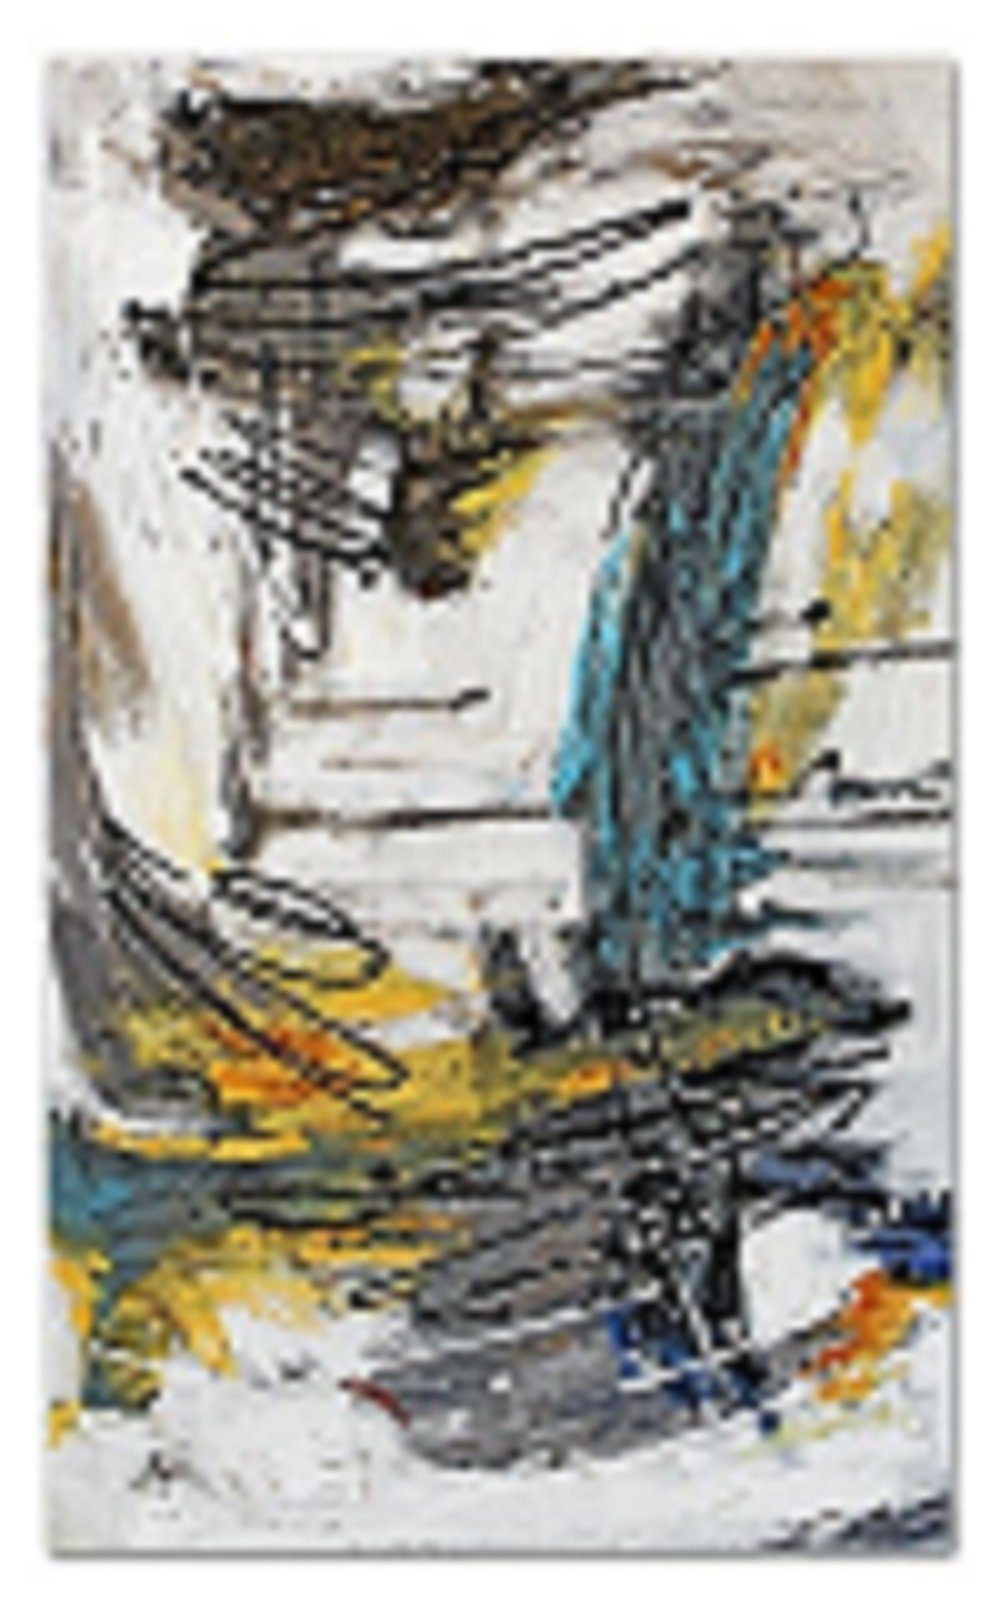 JVmoebel Ölbild Abstrakt Bild Handarbeit Bilder Rahmen Öl Gemälde G100129, Abstrakt